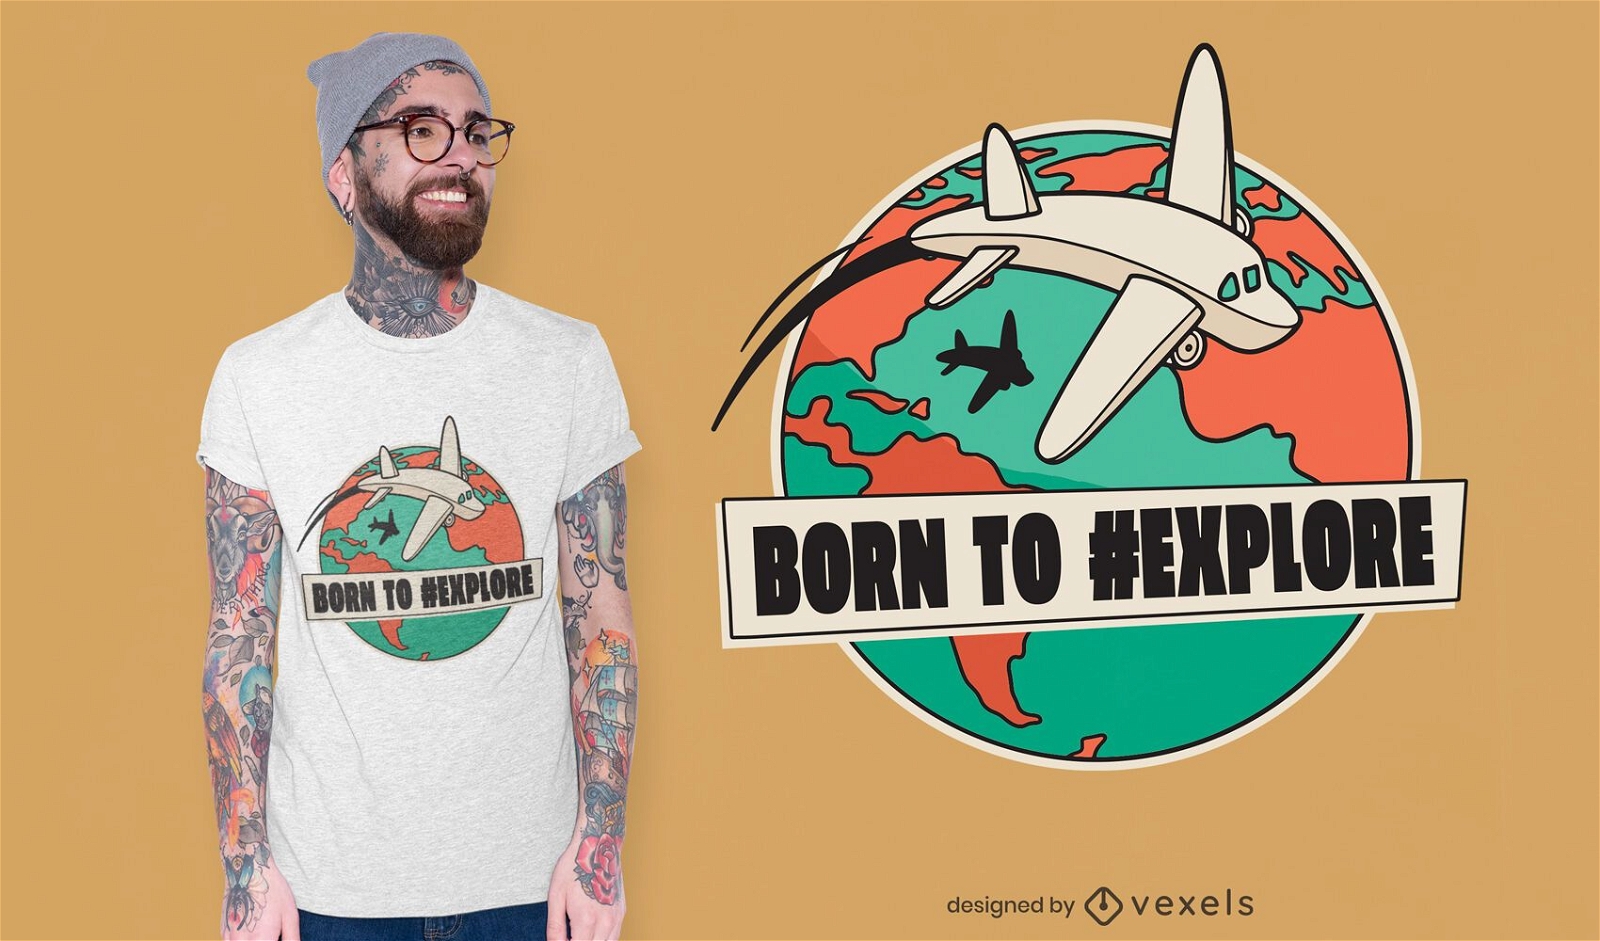 Born to explore t-shirt design